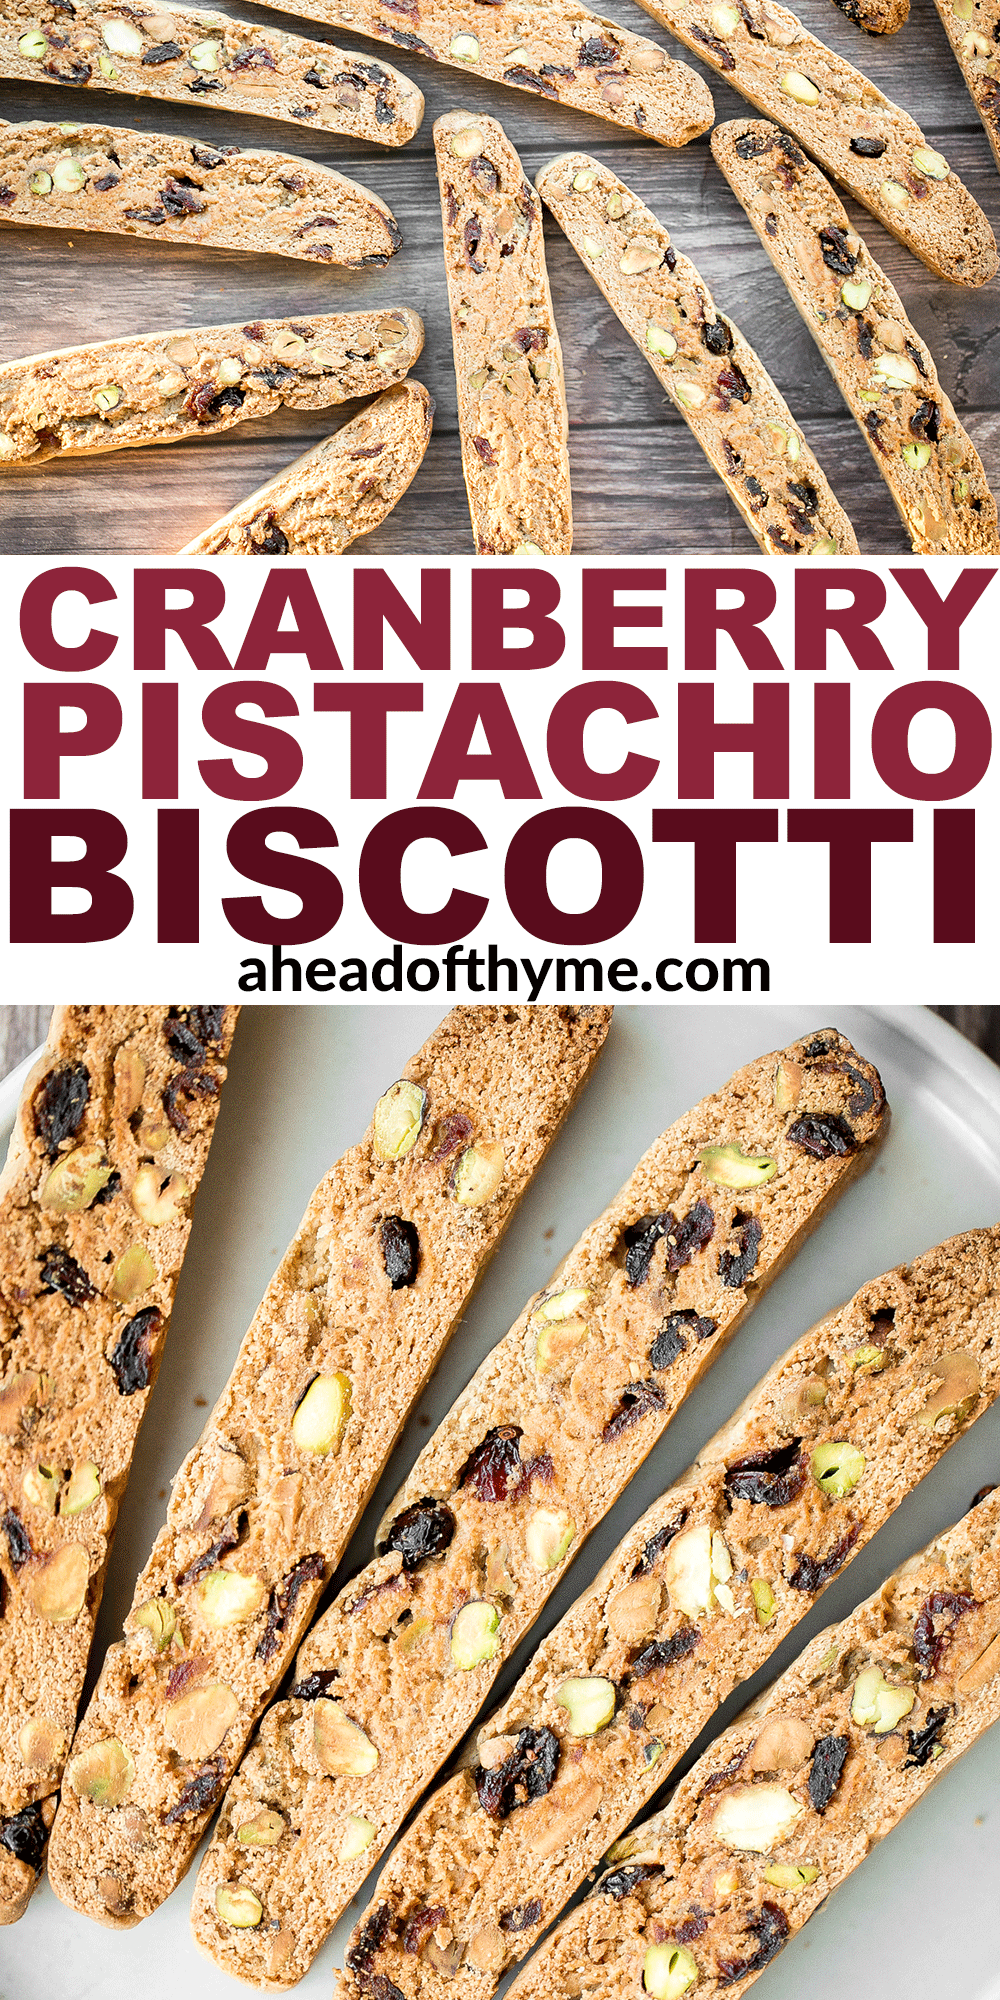 Cranberry Pistachio Biscotti